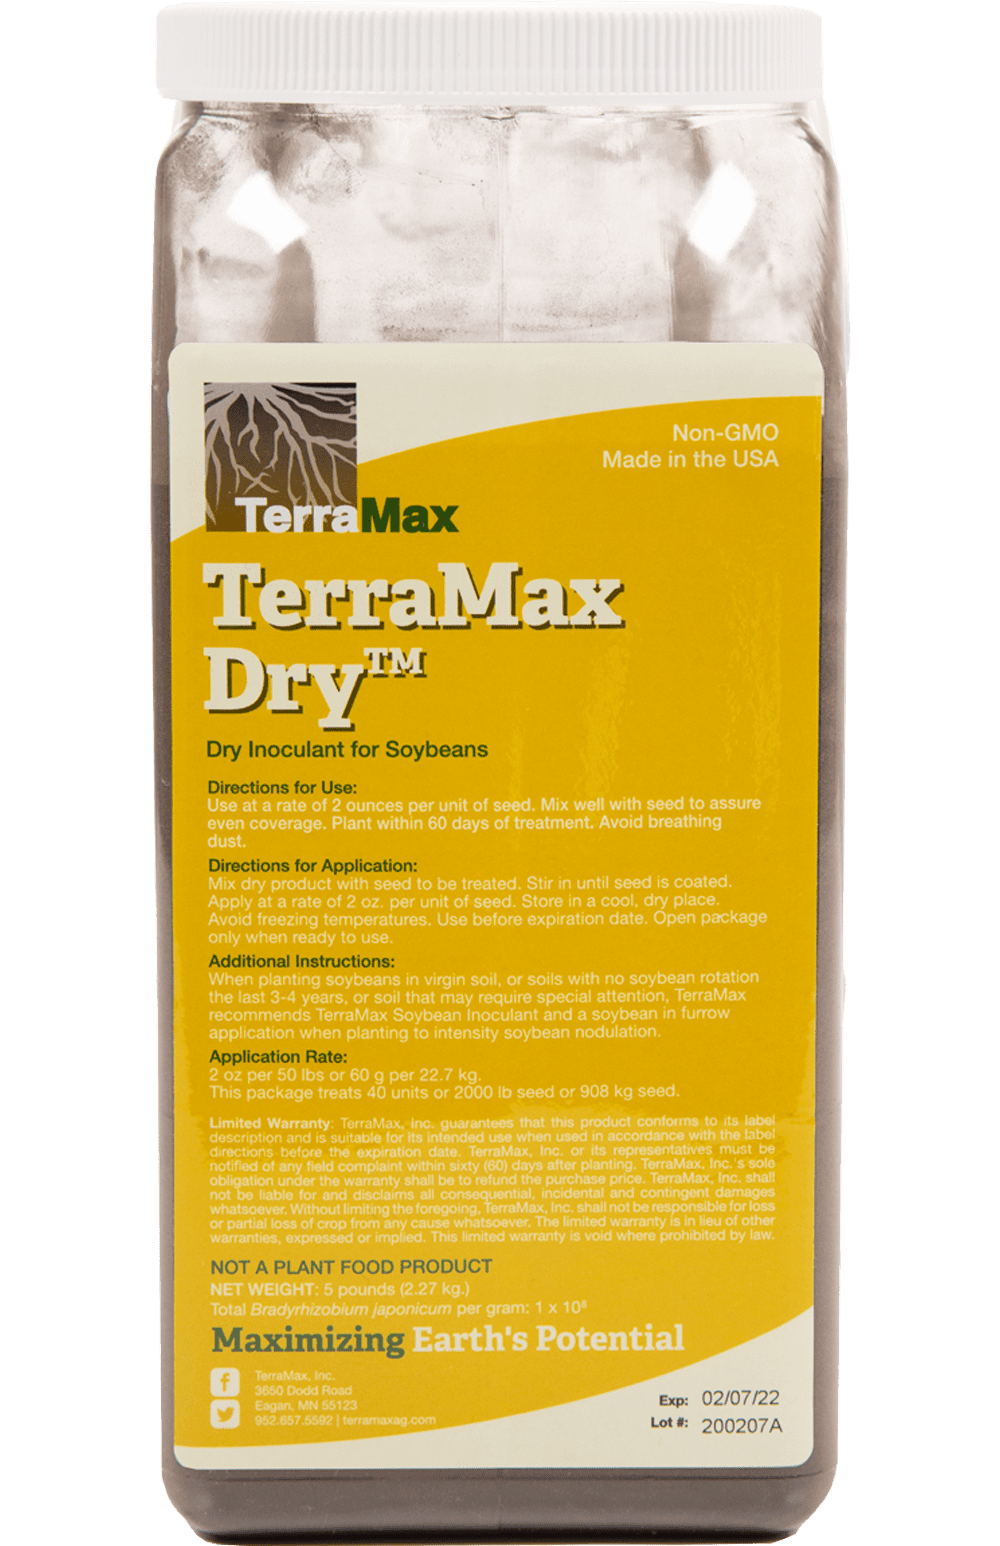 Terramax Dry microbial inoculant